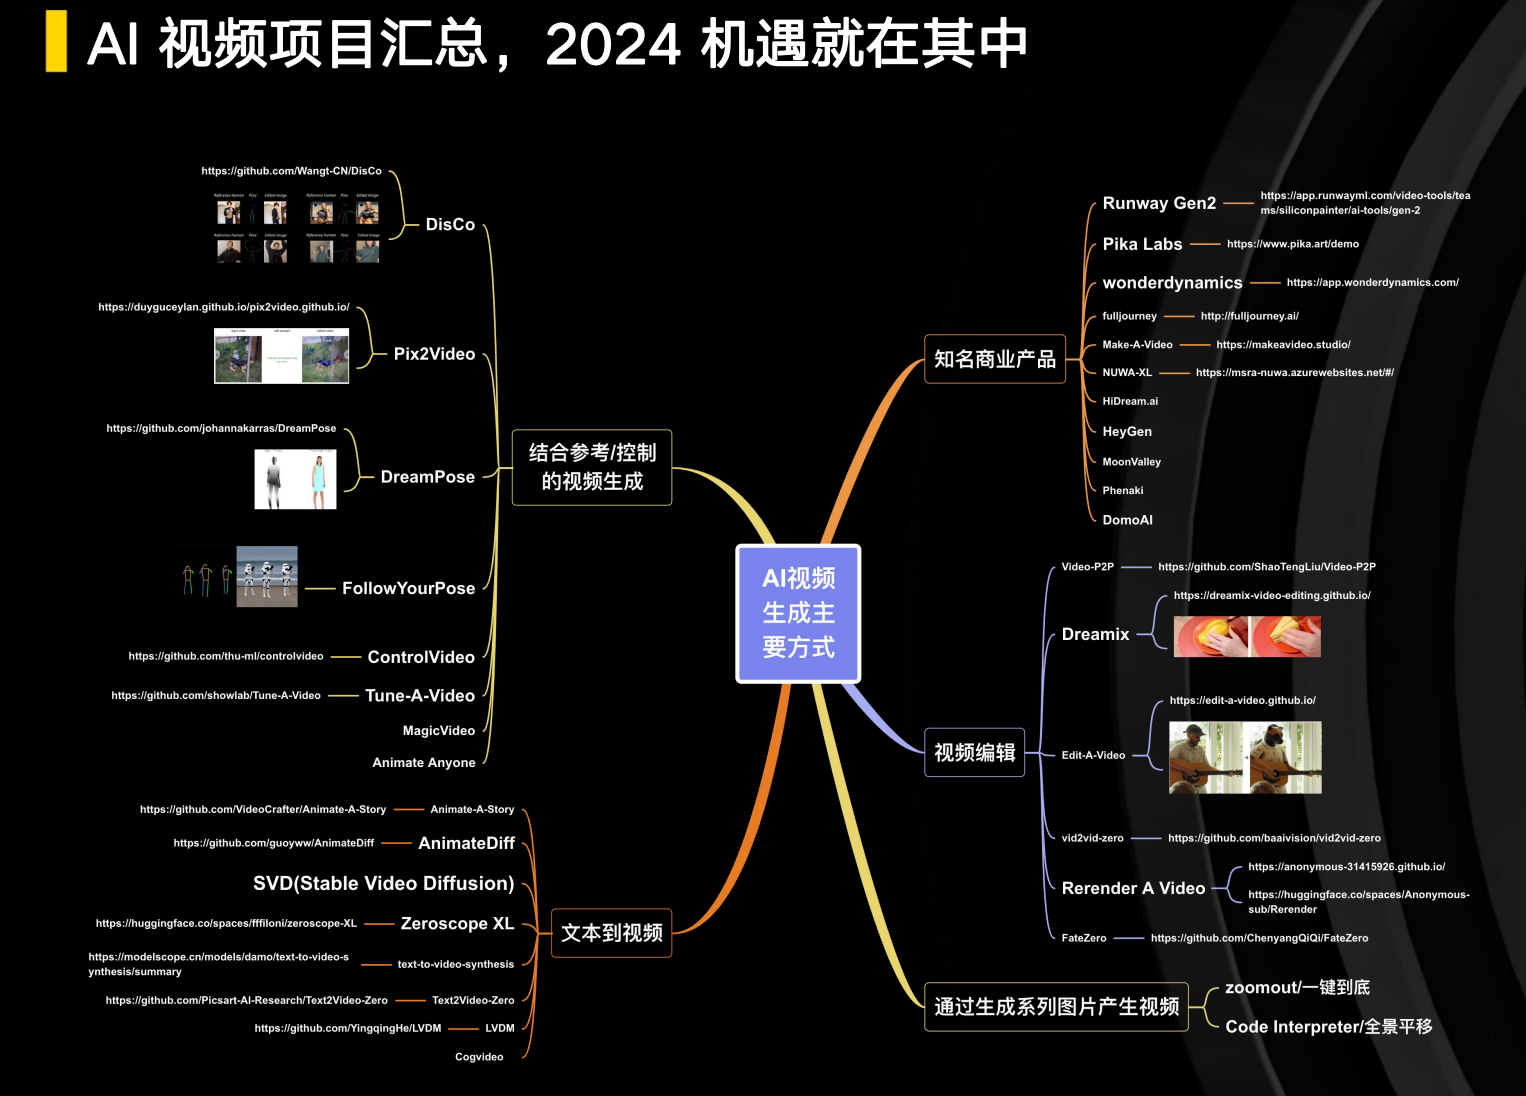 AI视频项目汇总，来源：《中国 AIGC 文生图产业白皮书 2023》